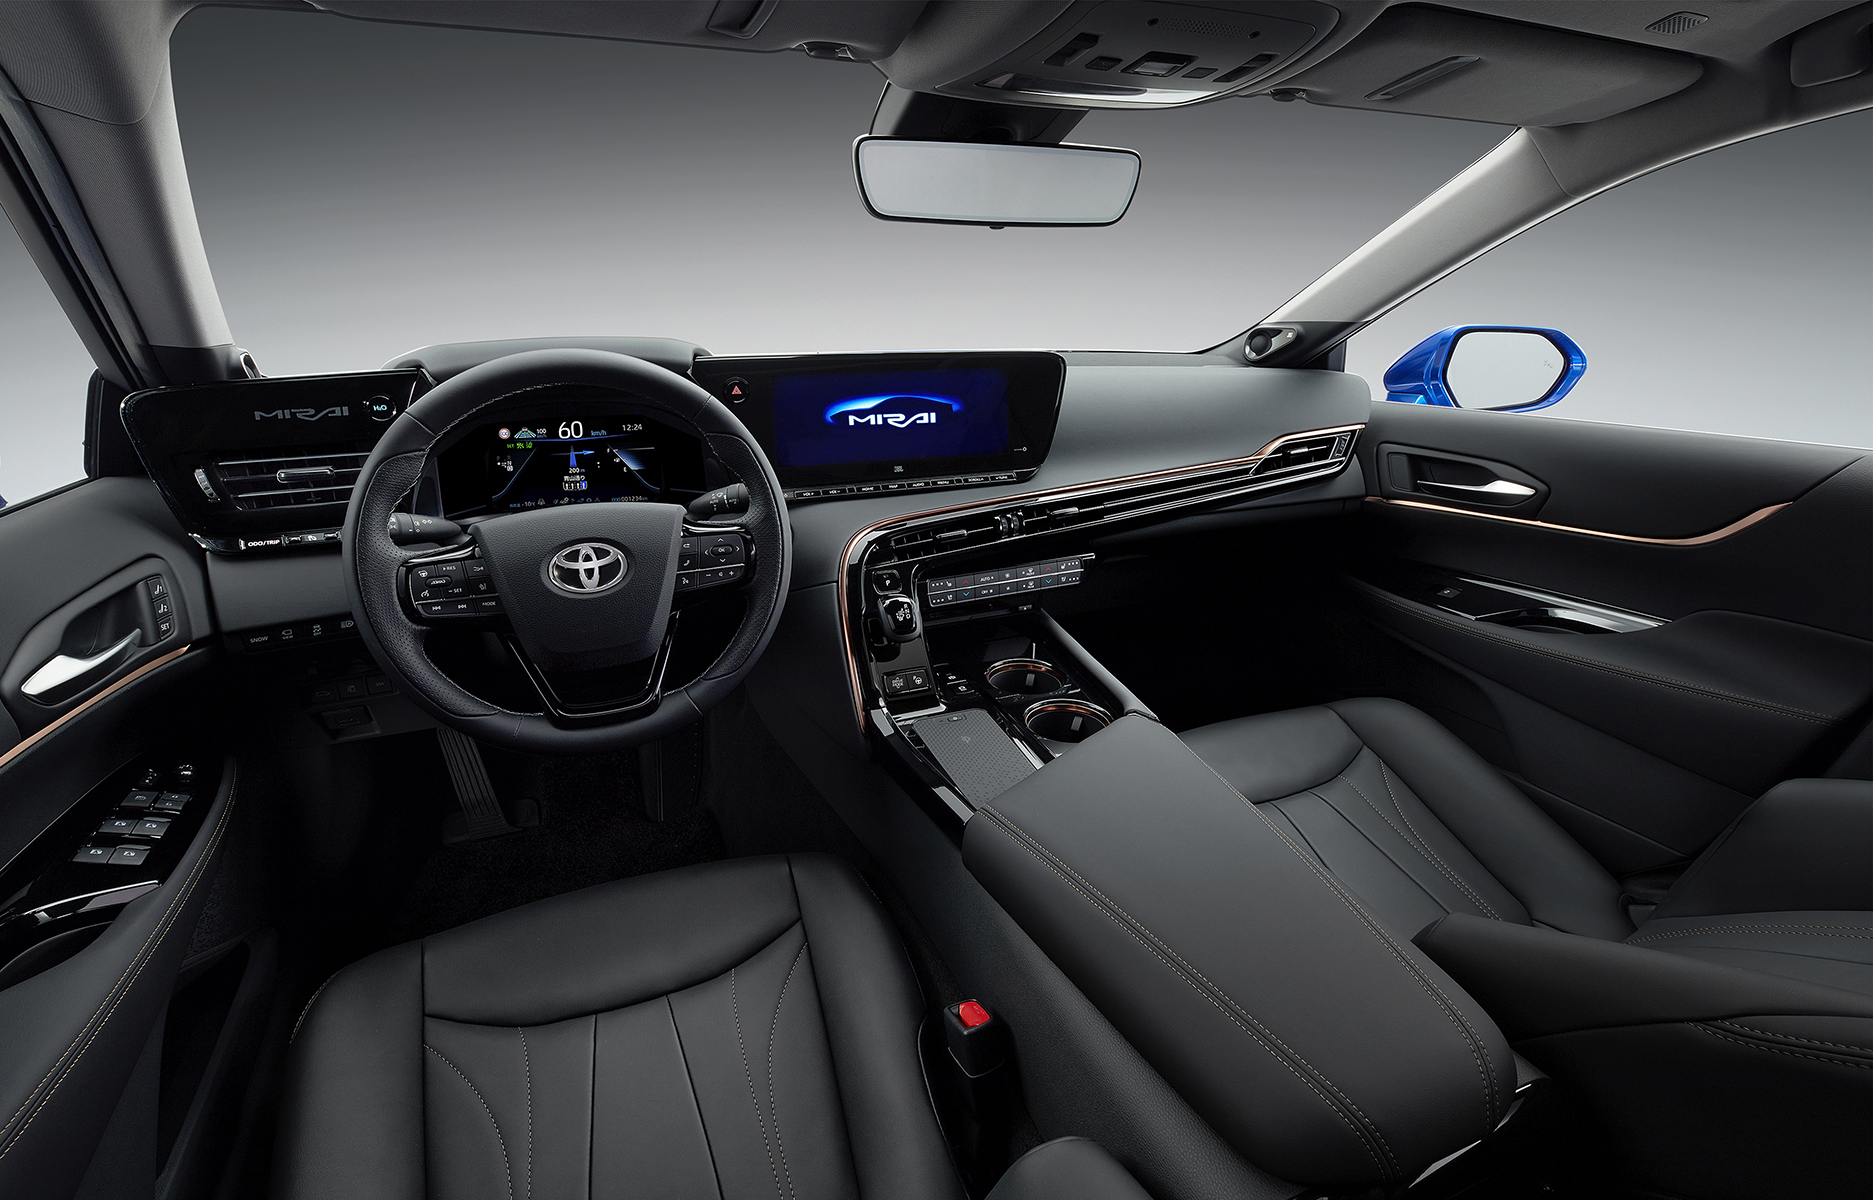 Coupe Inspired Design Modernizes All New 2021 Toyota Mirai Sedan